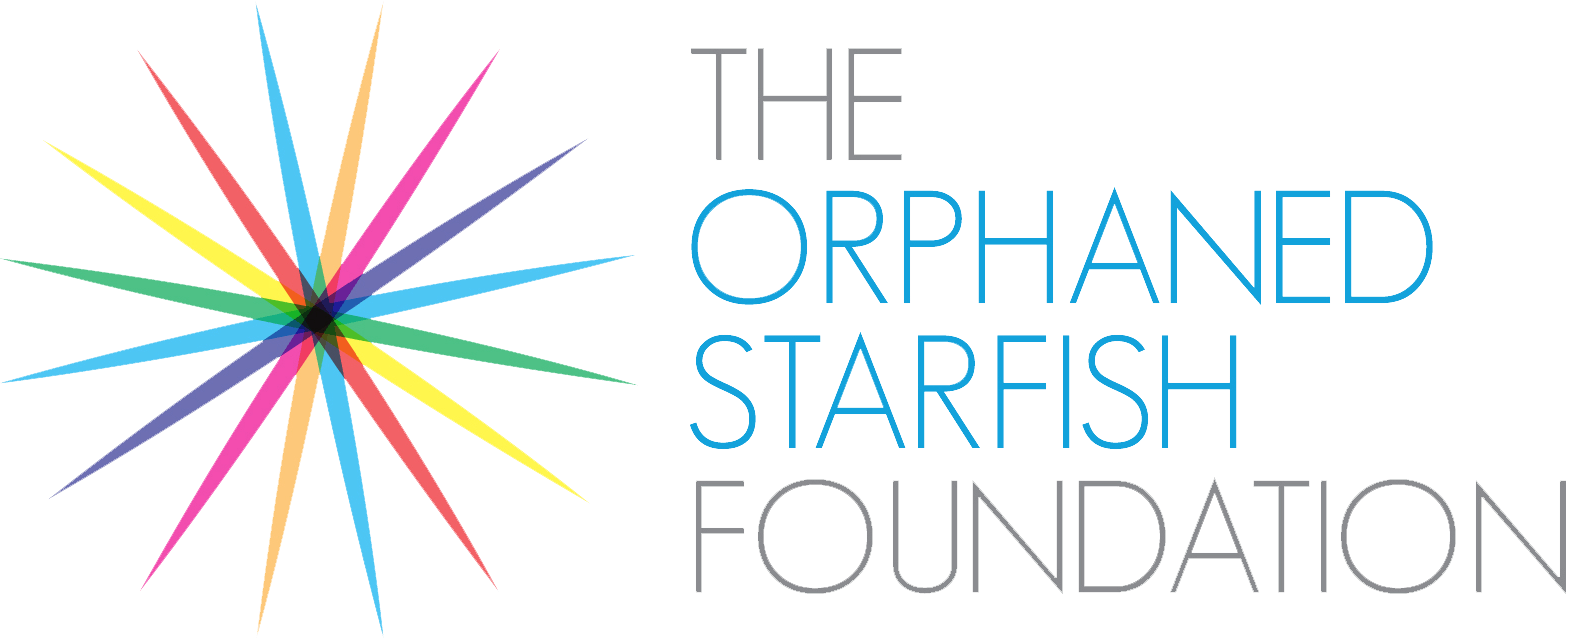 ORPHANED STARFISH FOUNDATION